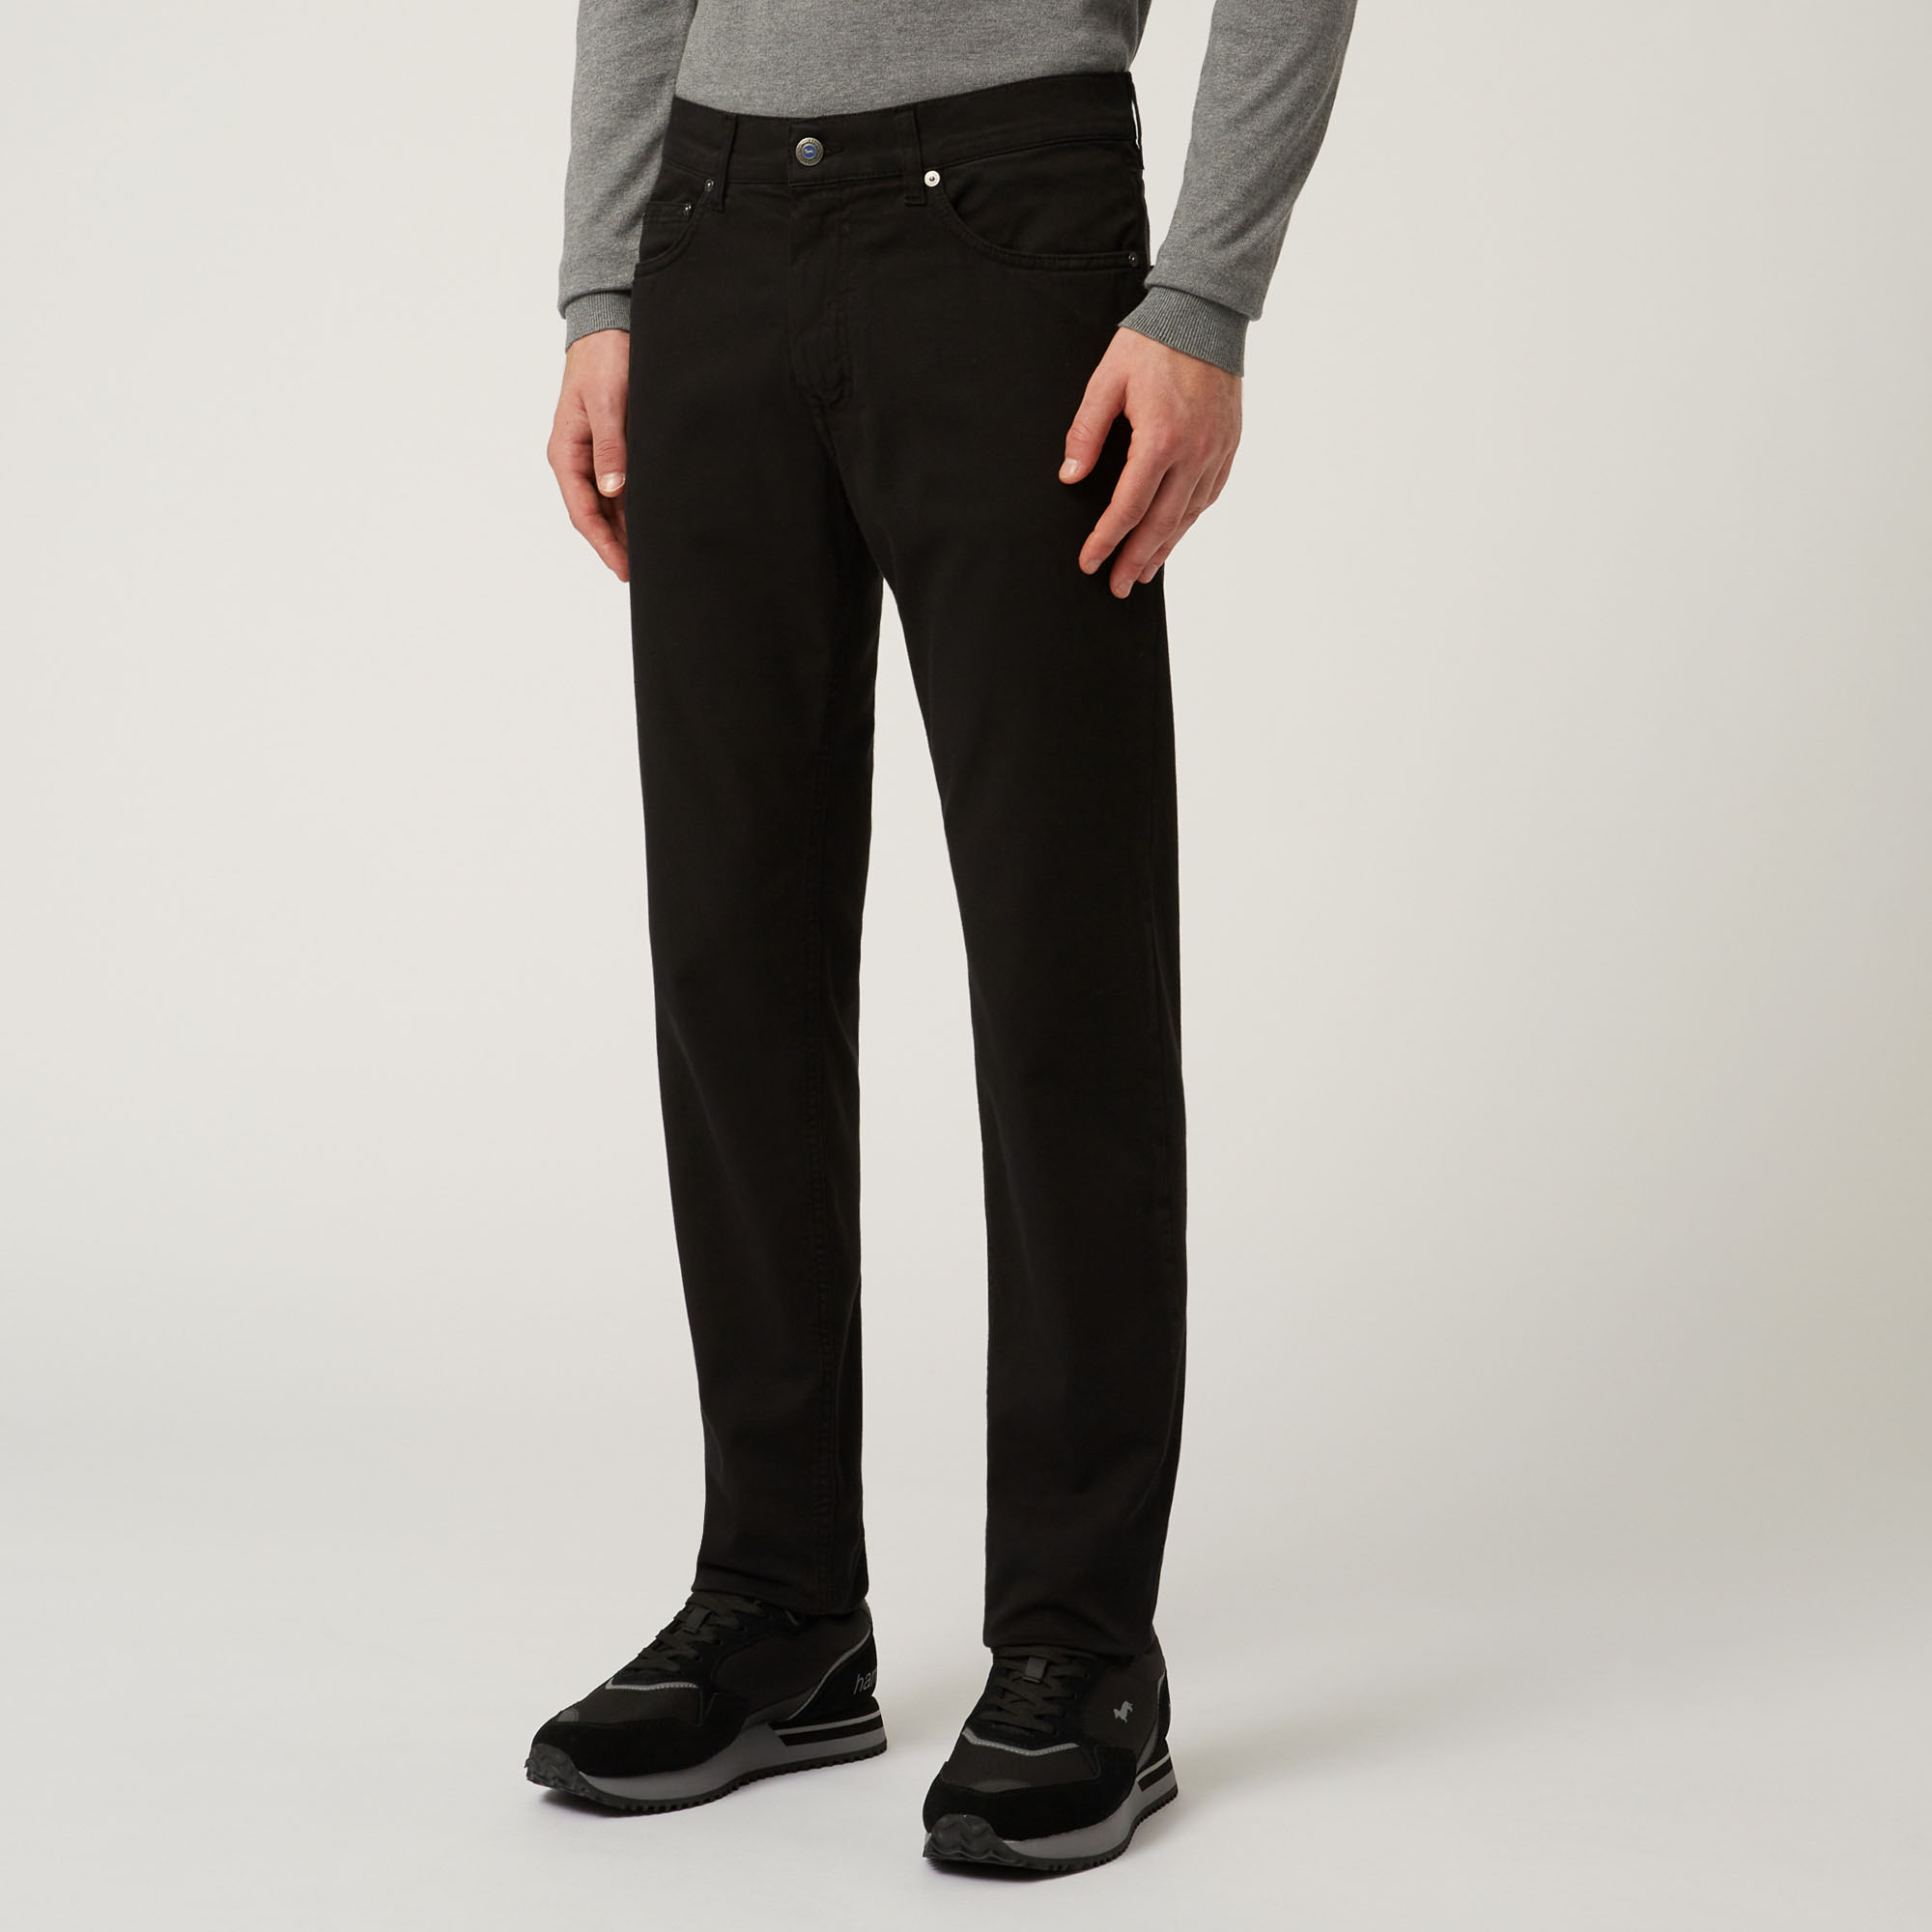 Essentials trousers in plain coloured cotton, Black, large